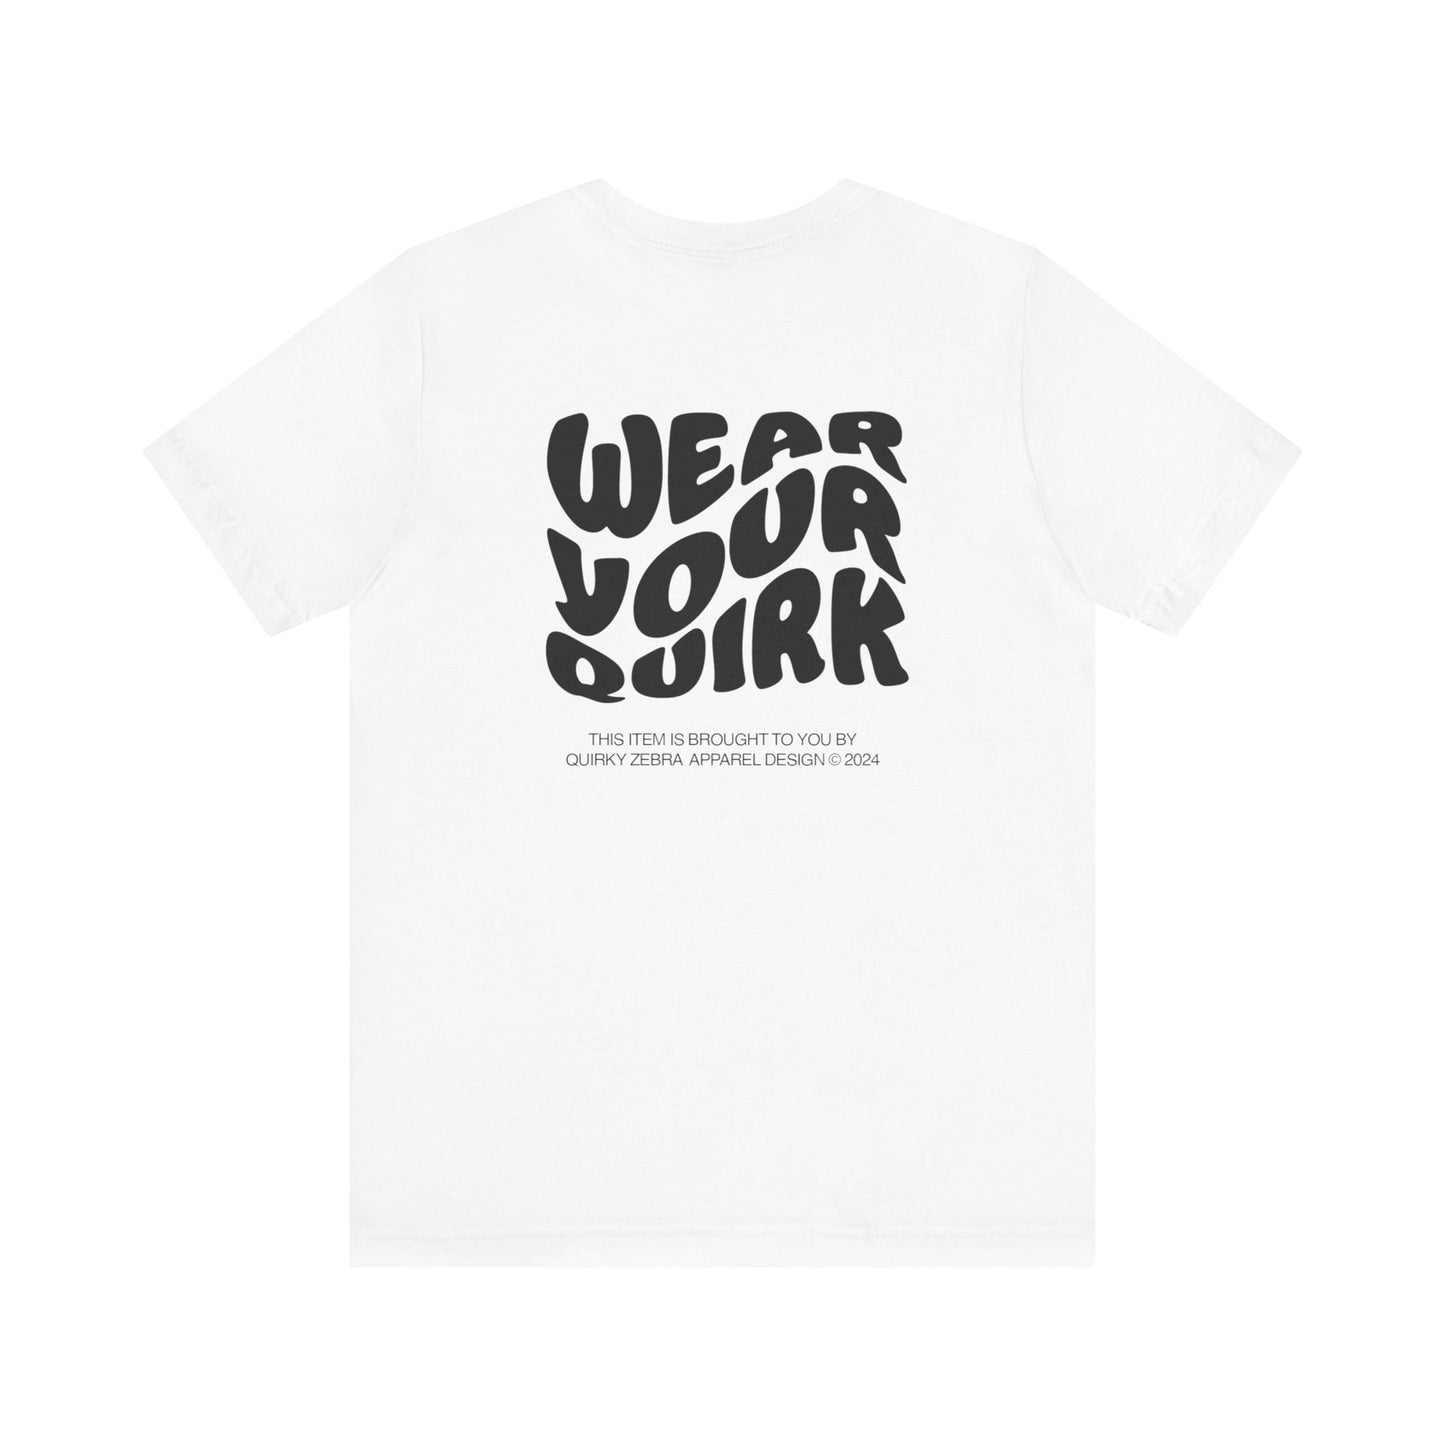 Spacebear t-shirt